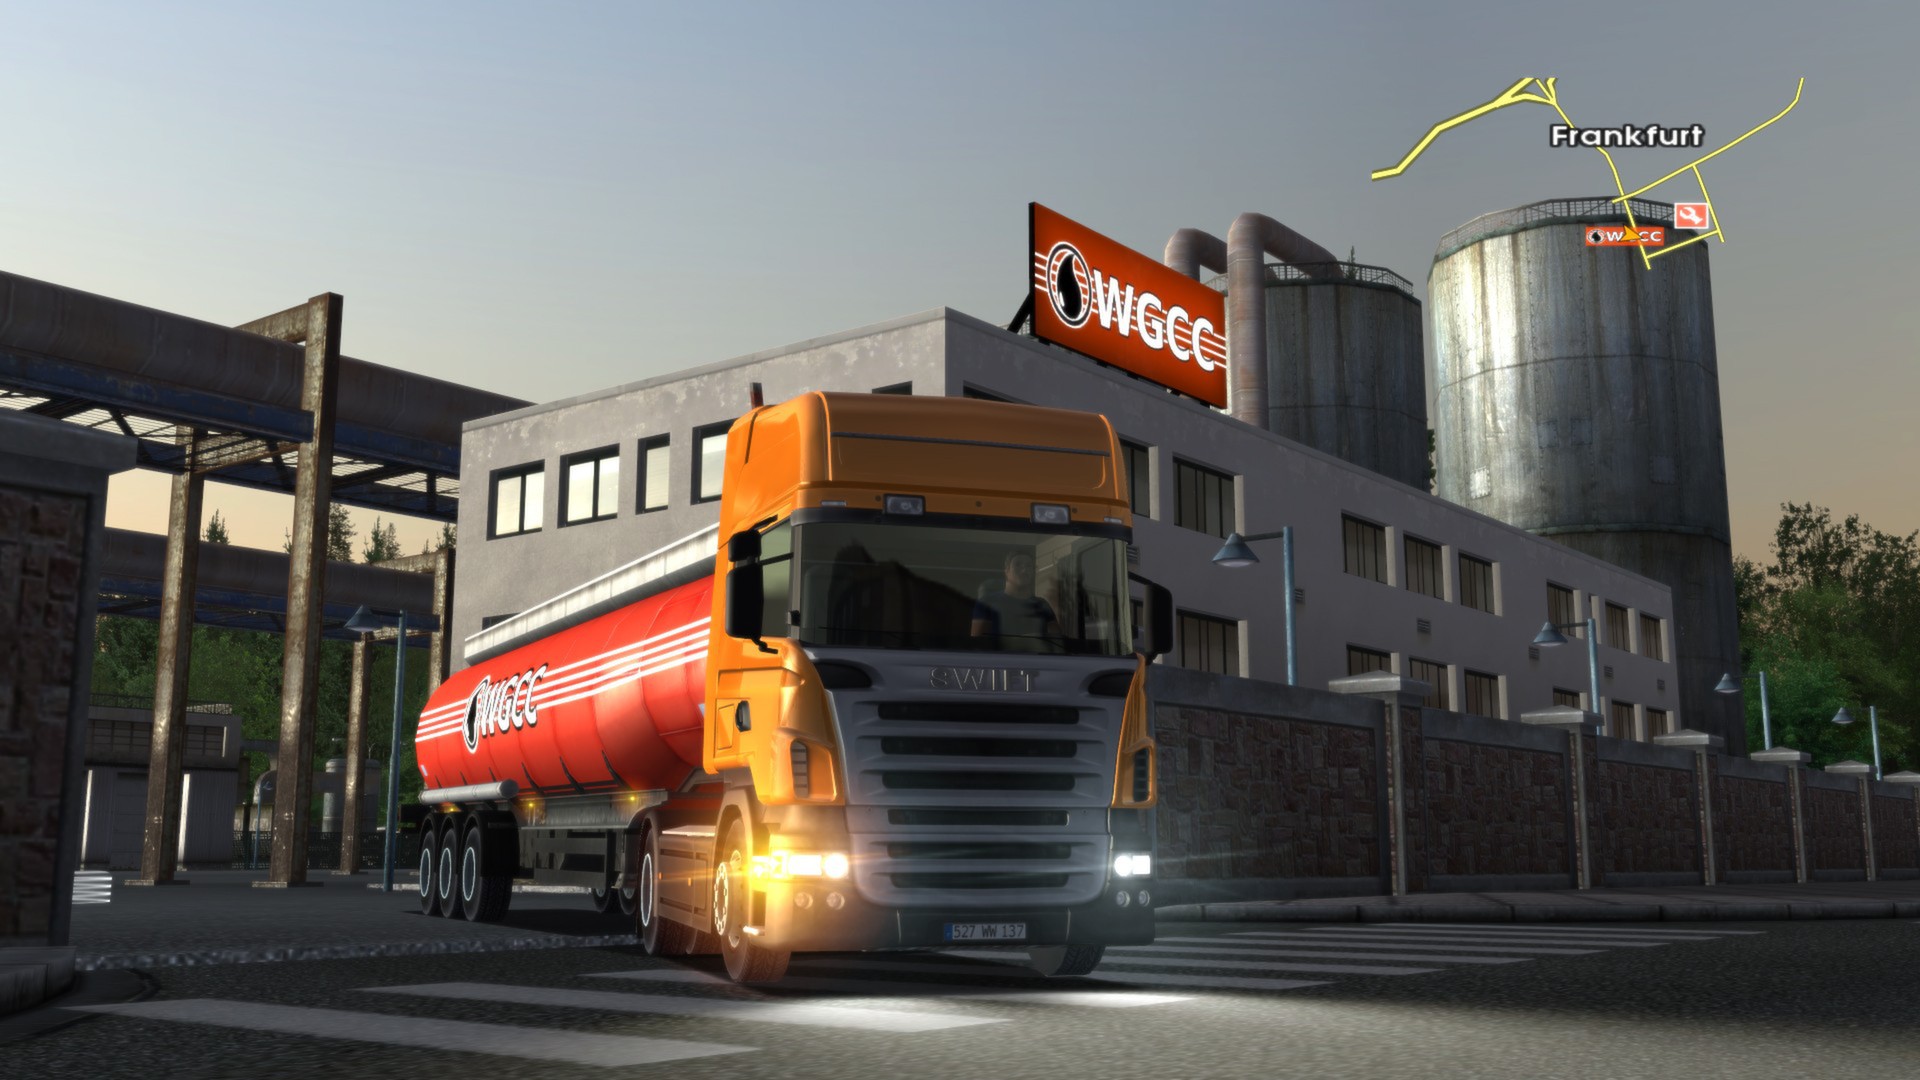 Euro Truck Simulator 1 + 2 Bundle Steam CD Key